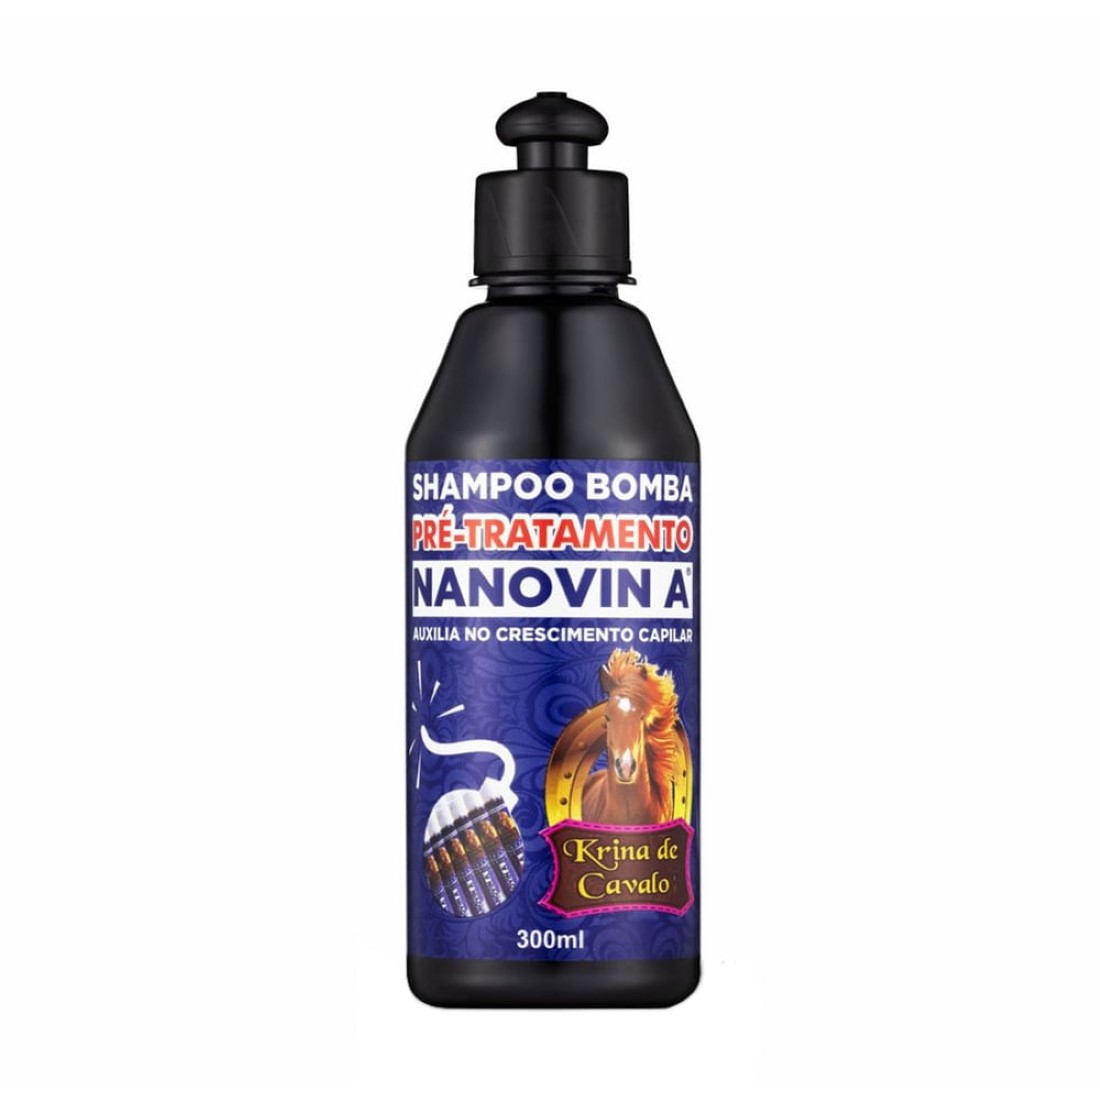 Shampoo Bomba Pré-Tratamento Nanovin A 300ml - krina de Cavalo